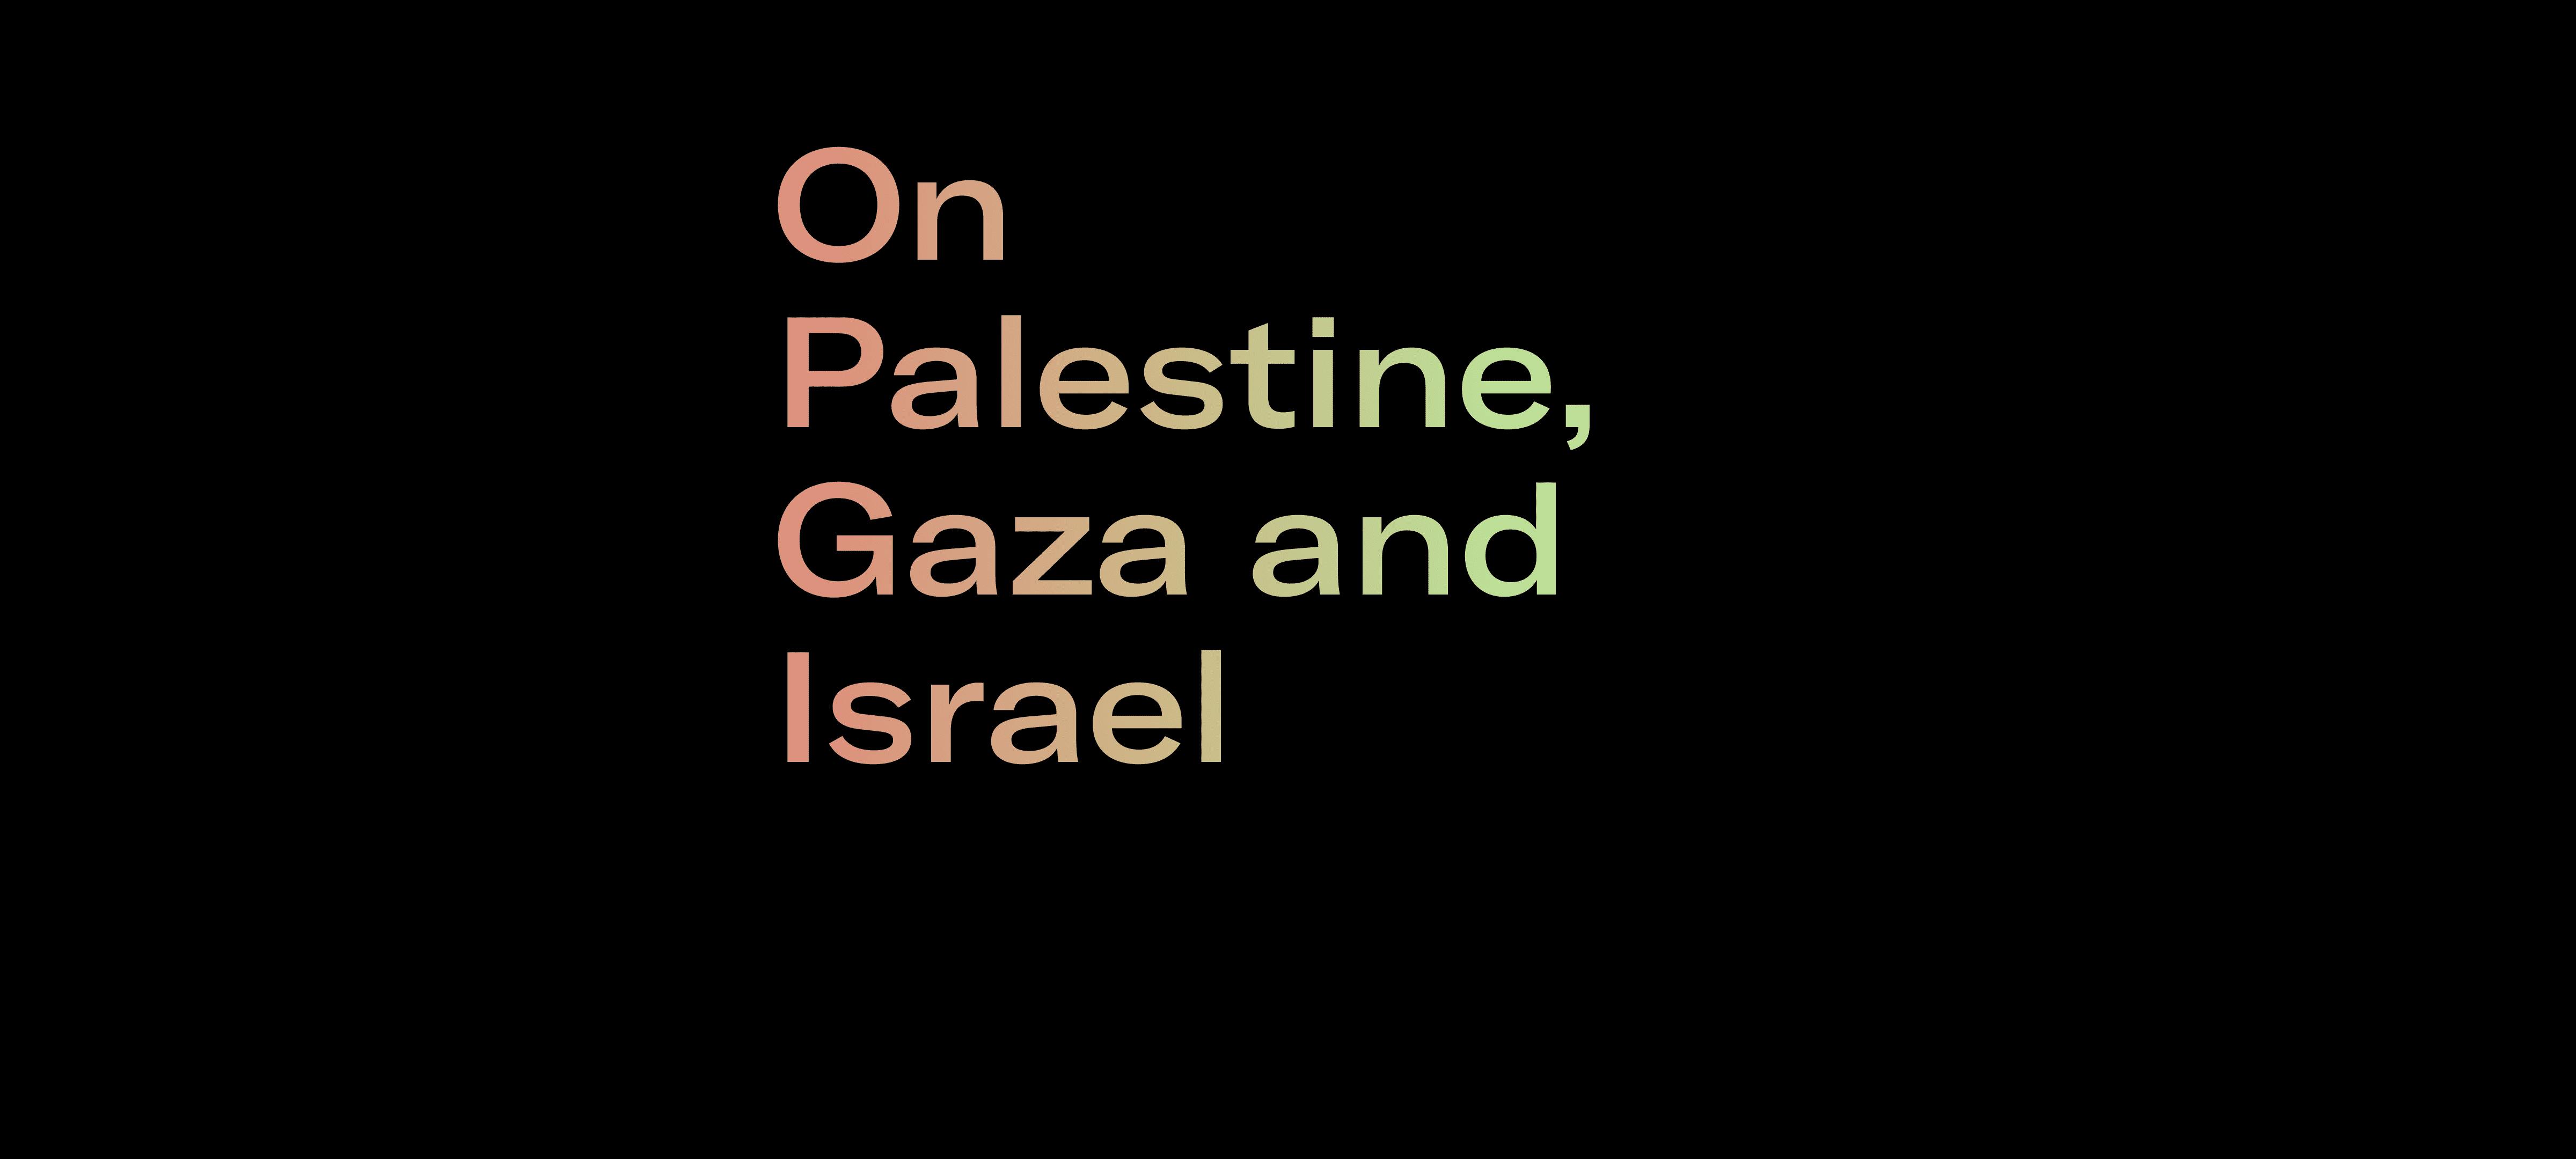 On Palestine, Gaza and Israel